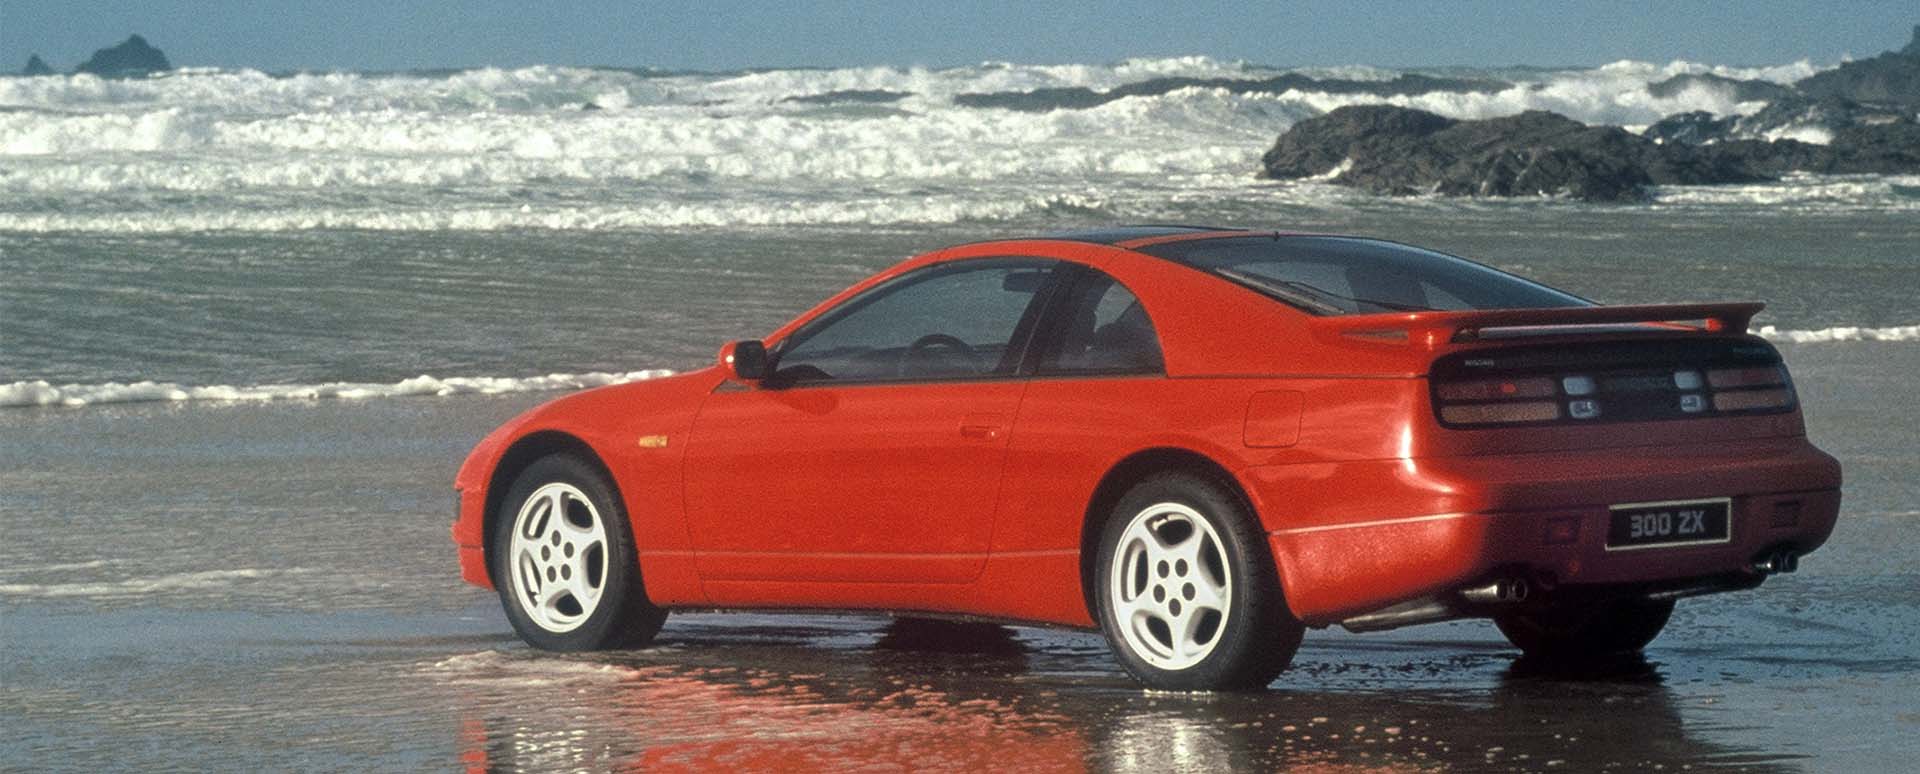 Red Nissan 300ZX rear quarter shot, parked on a beach